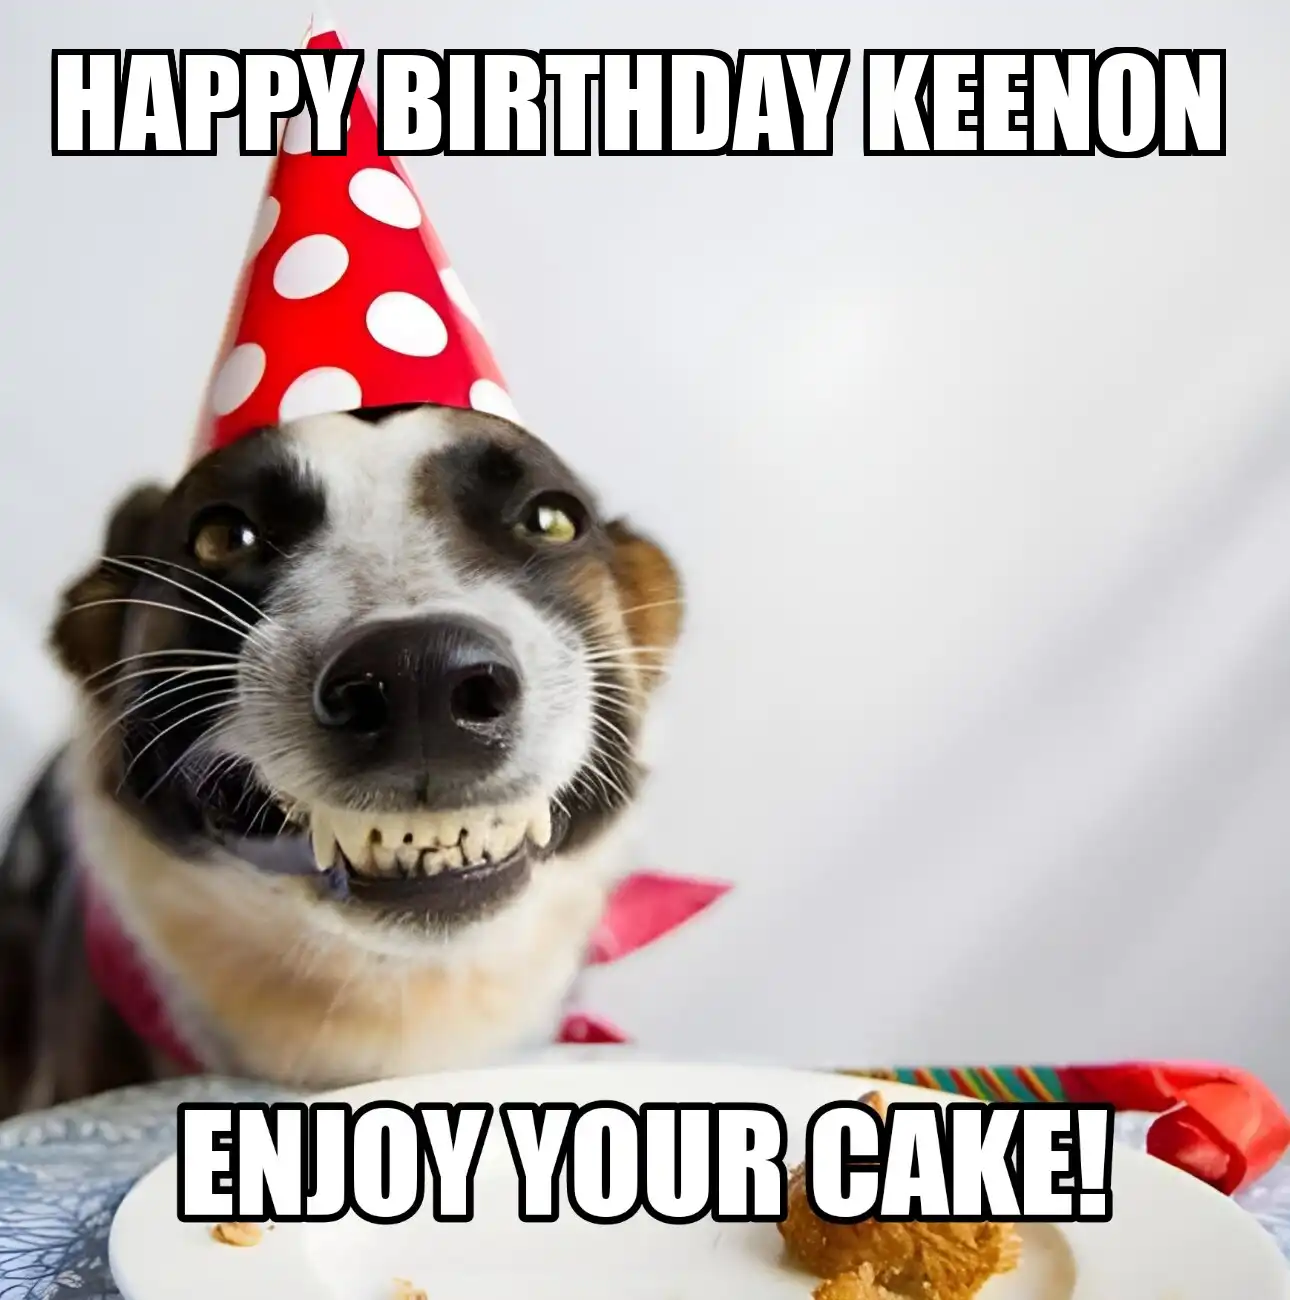 Happy Birthday Keenon Enjoy Your Cake Dog Meme